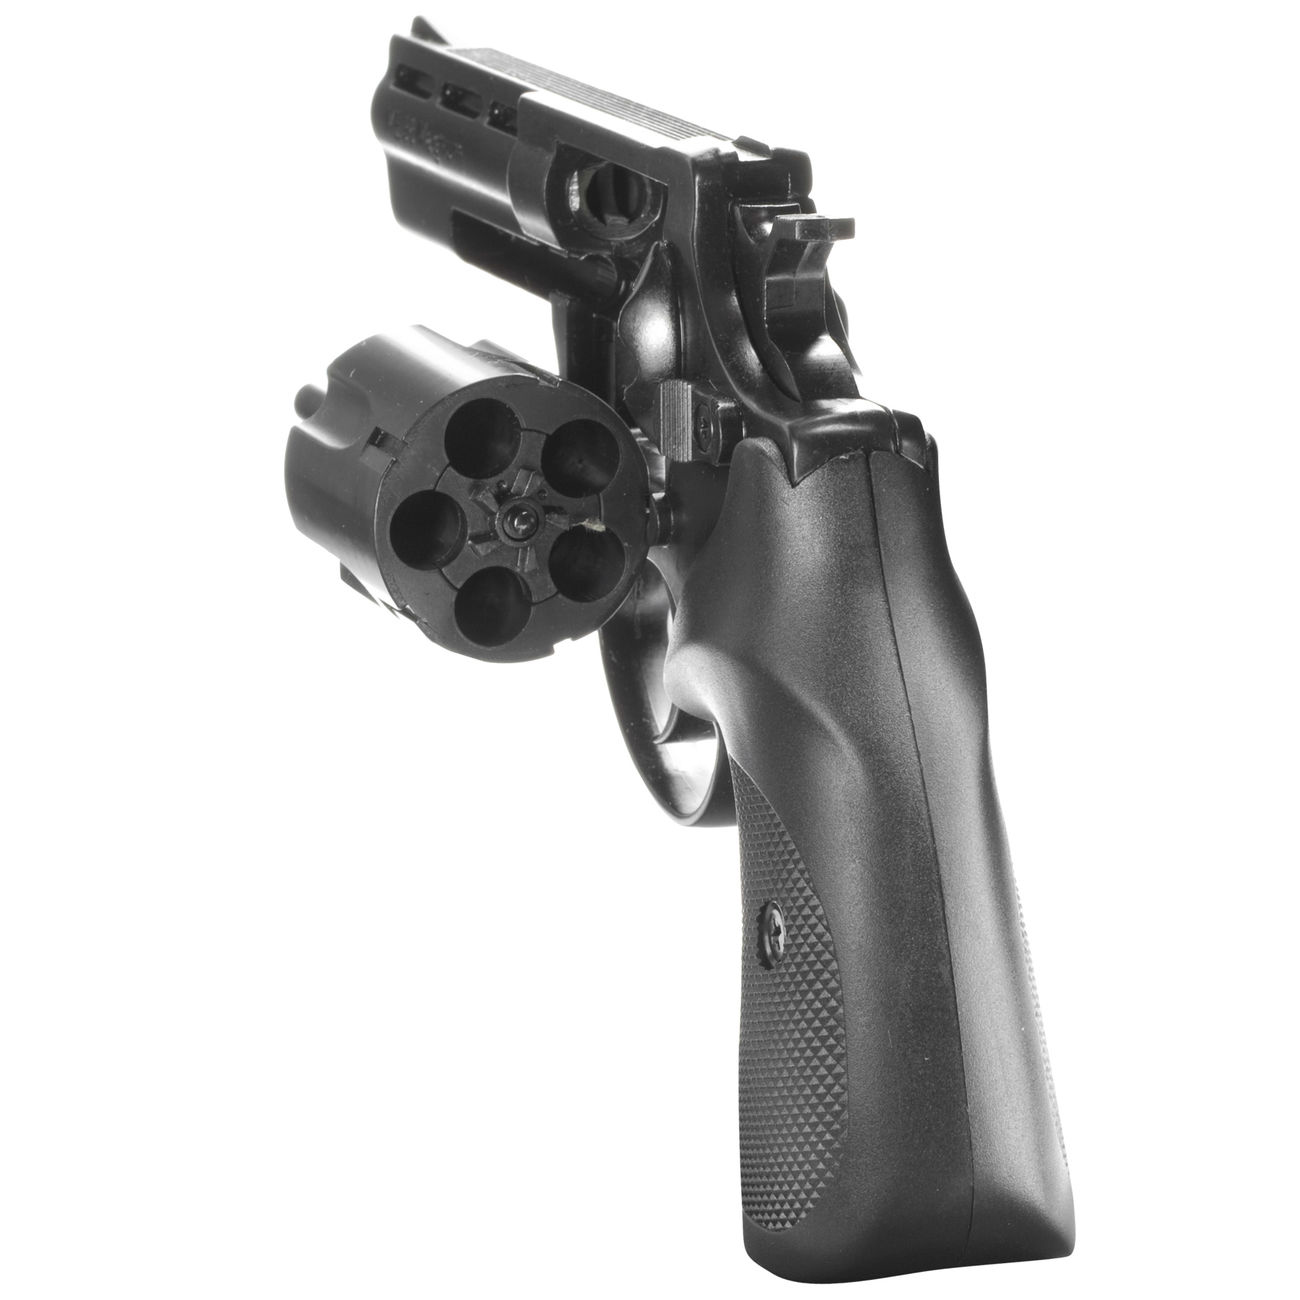   ME38 Magnum Schreckschuss Revolver 9mm R.K. brüniert inkl. Marken-Platzpatronen Bild 1